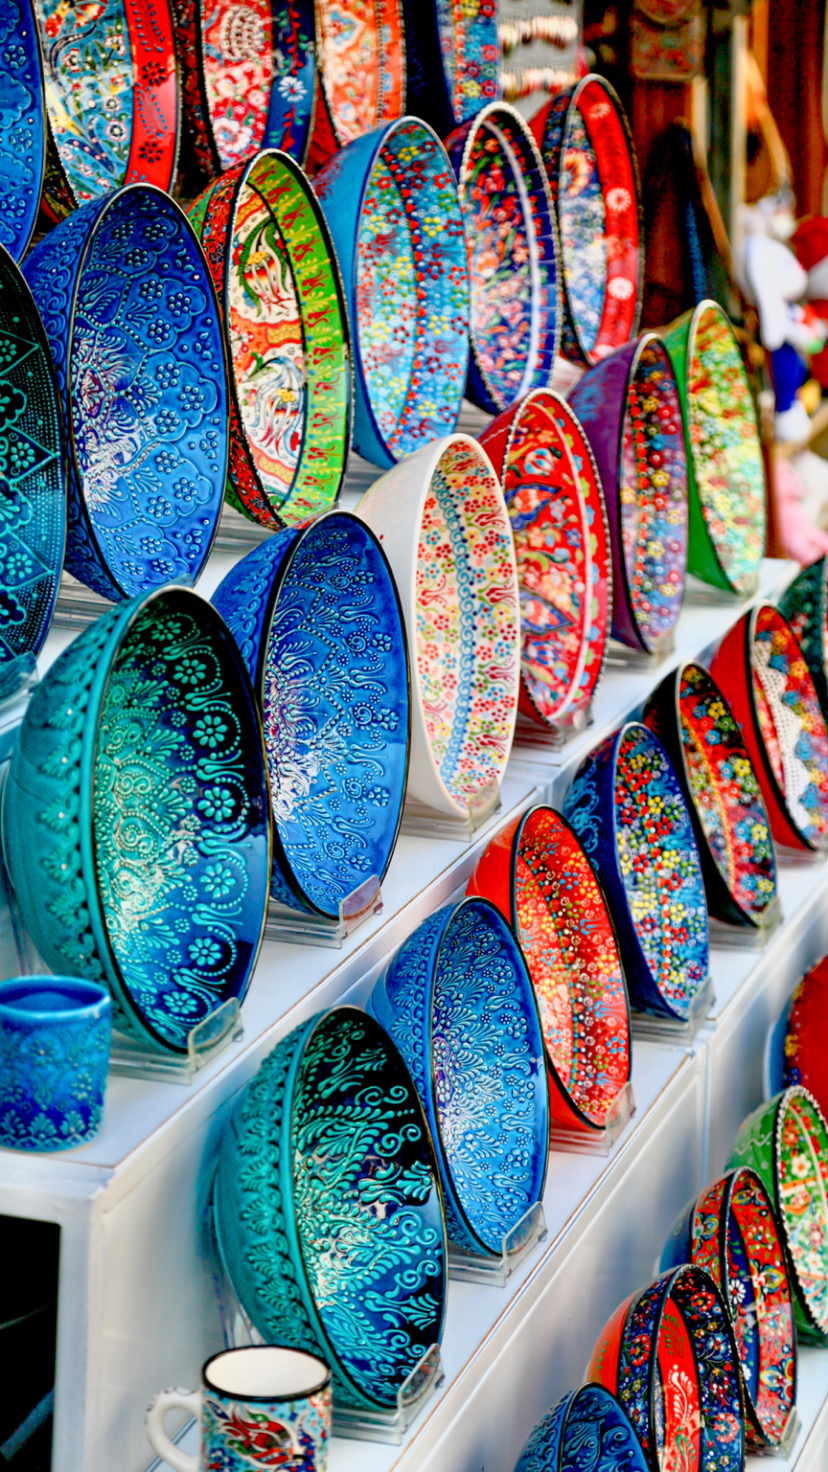 Hand made bowls from the Gjirokaster Bazaar